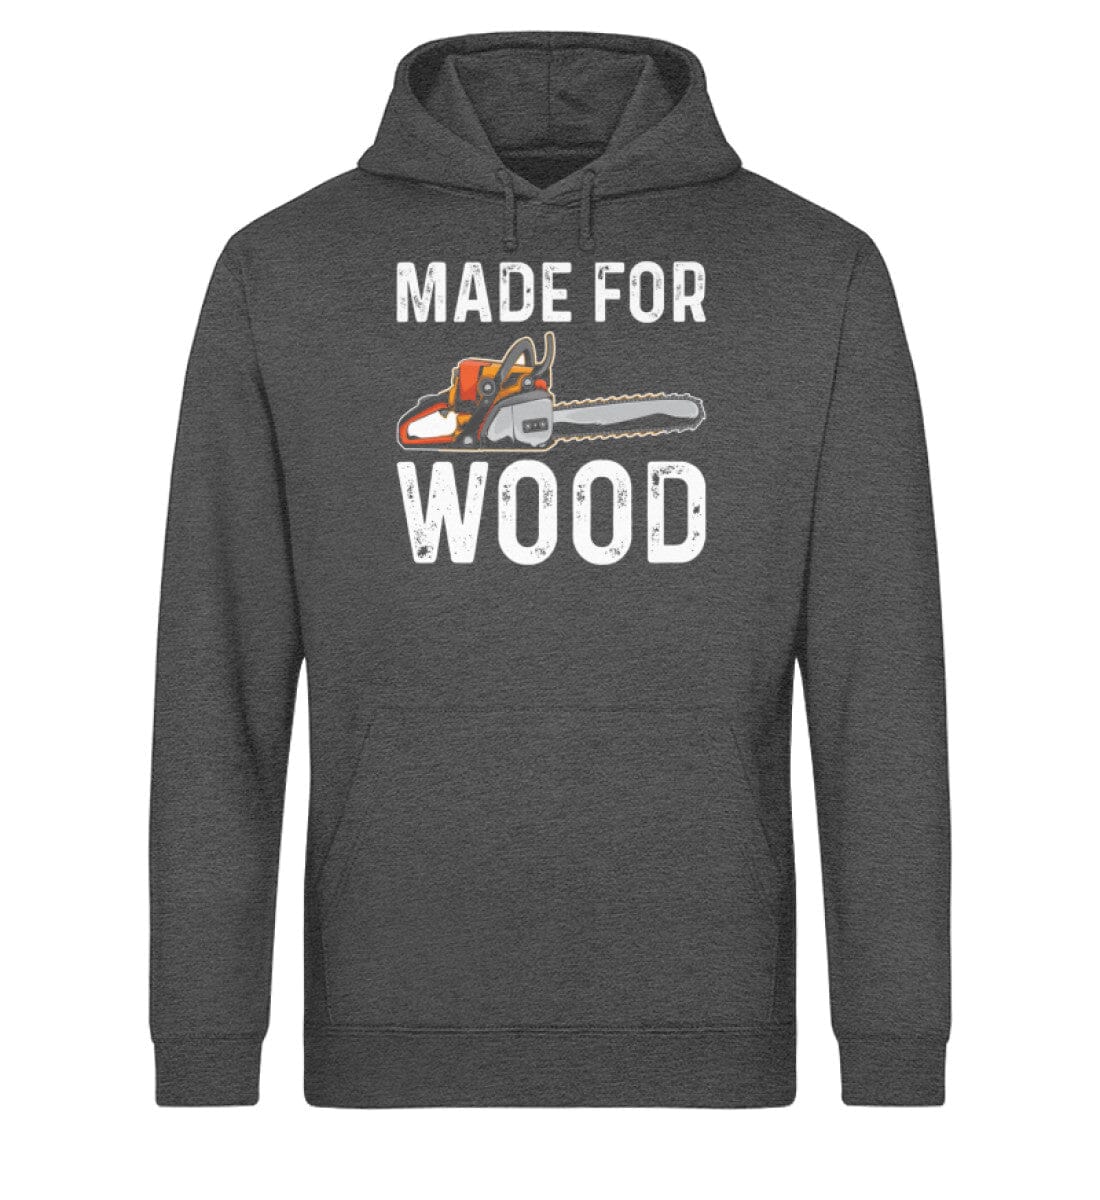 Made for wood - Unisex Bio Hoodie 